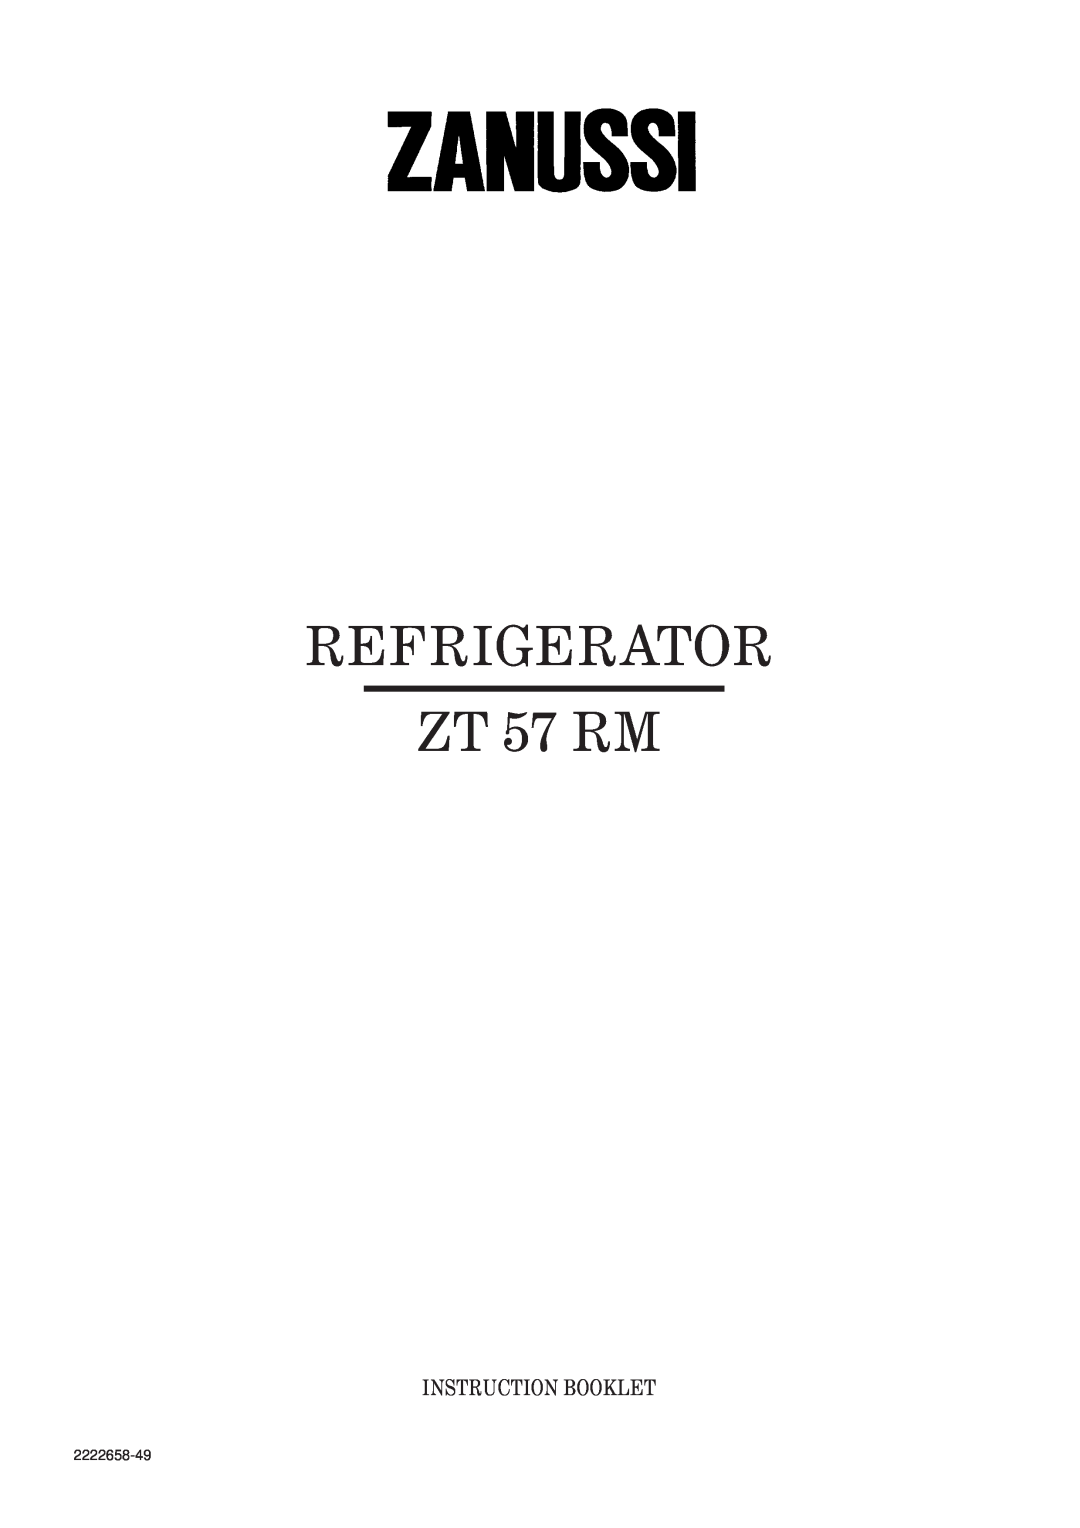 Zanussi ZT 57 RM manual Refrigerator, Instruction Booklet, 2222658-49 